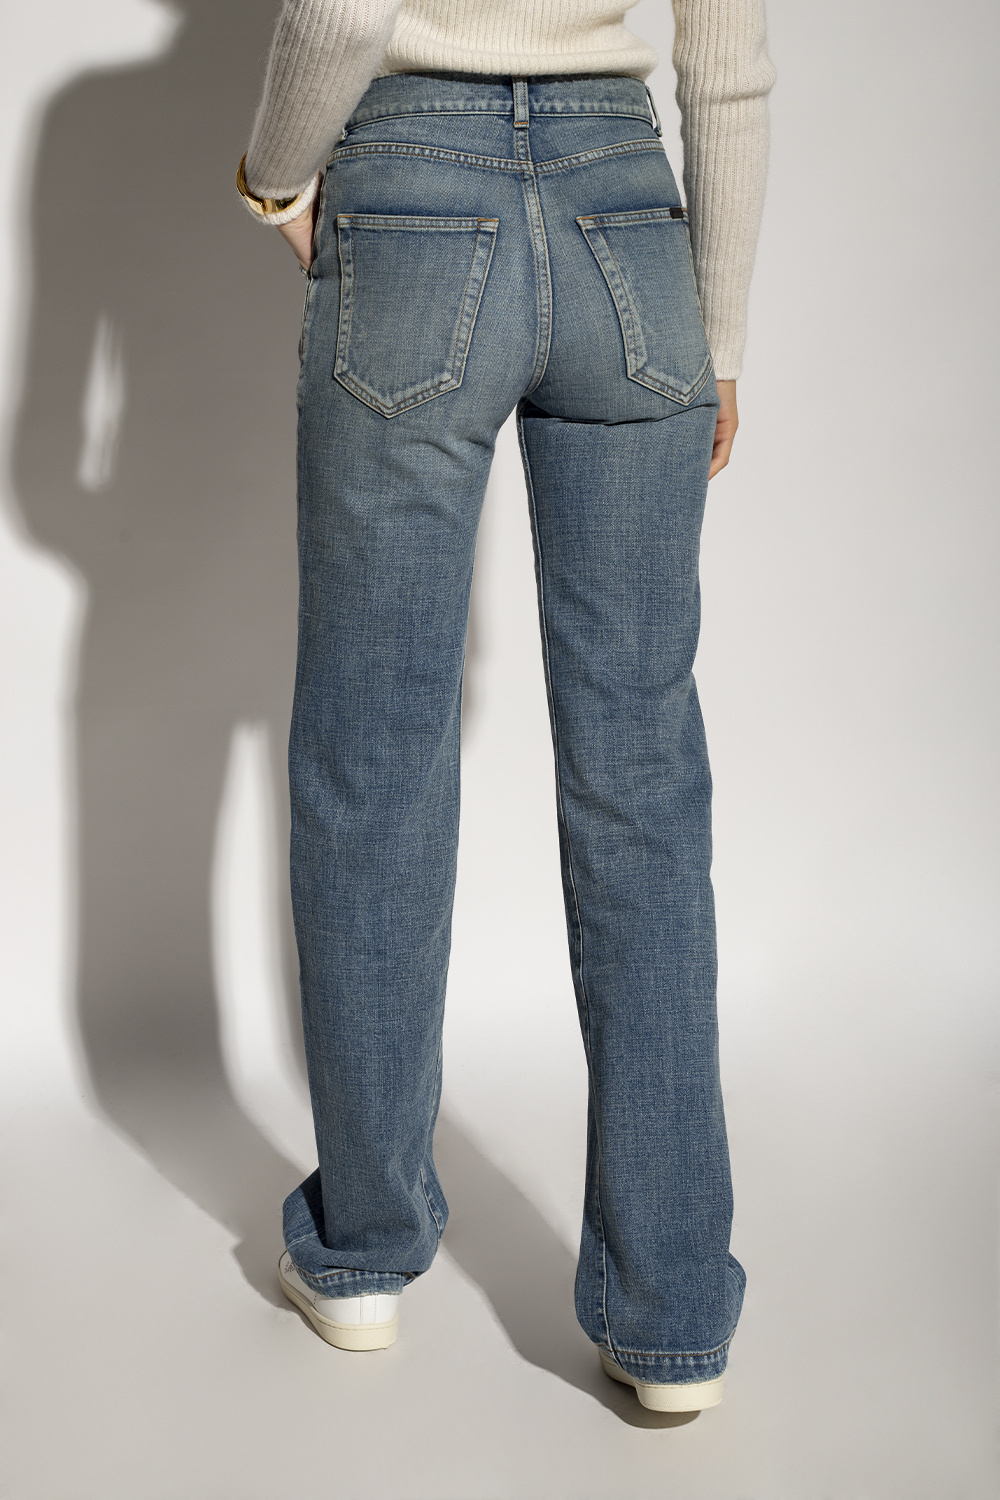 Saint Laurent ‘Jane’ high-waisted jeans